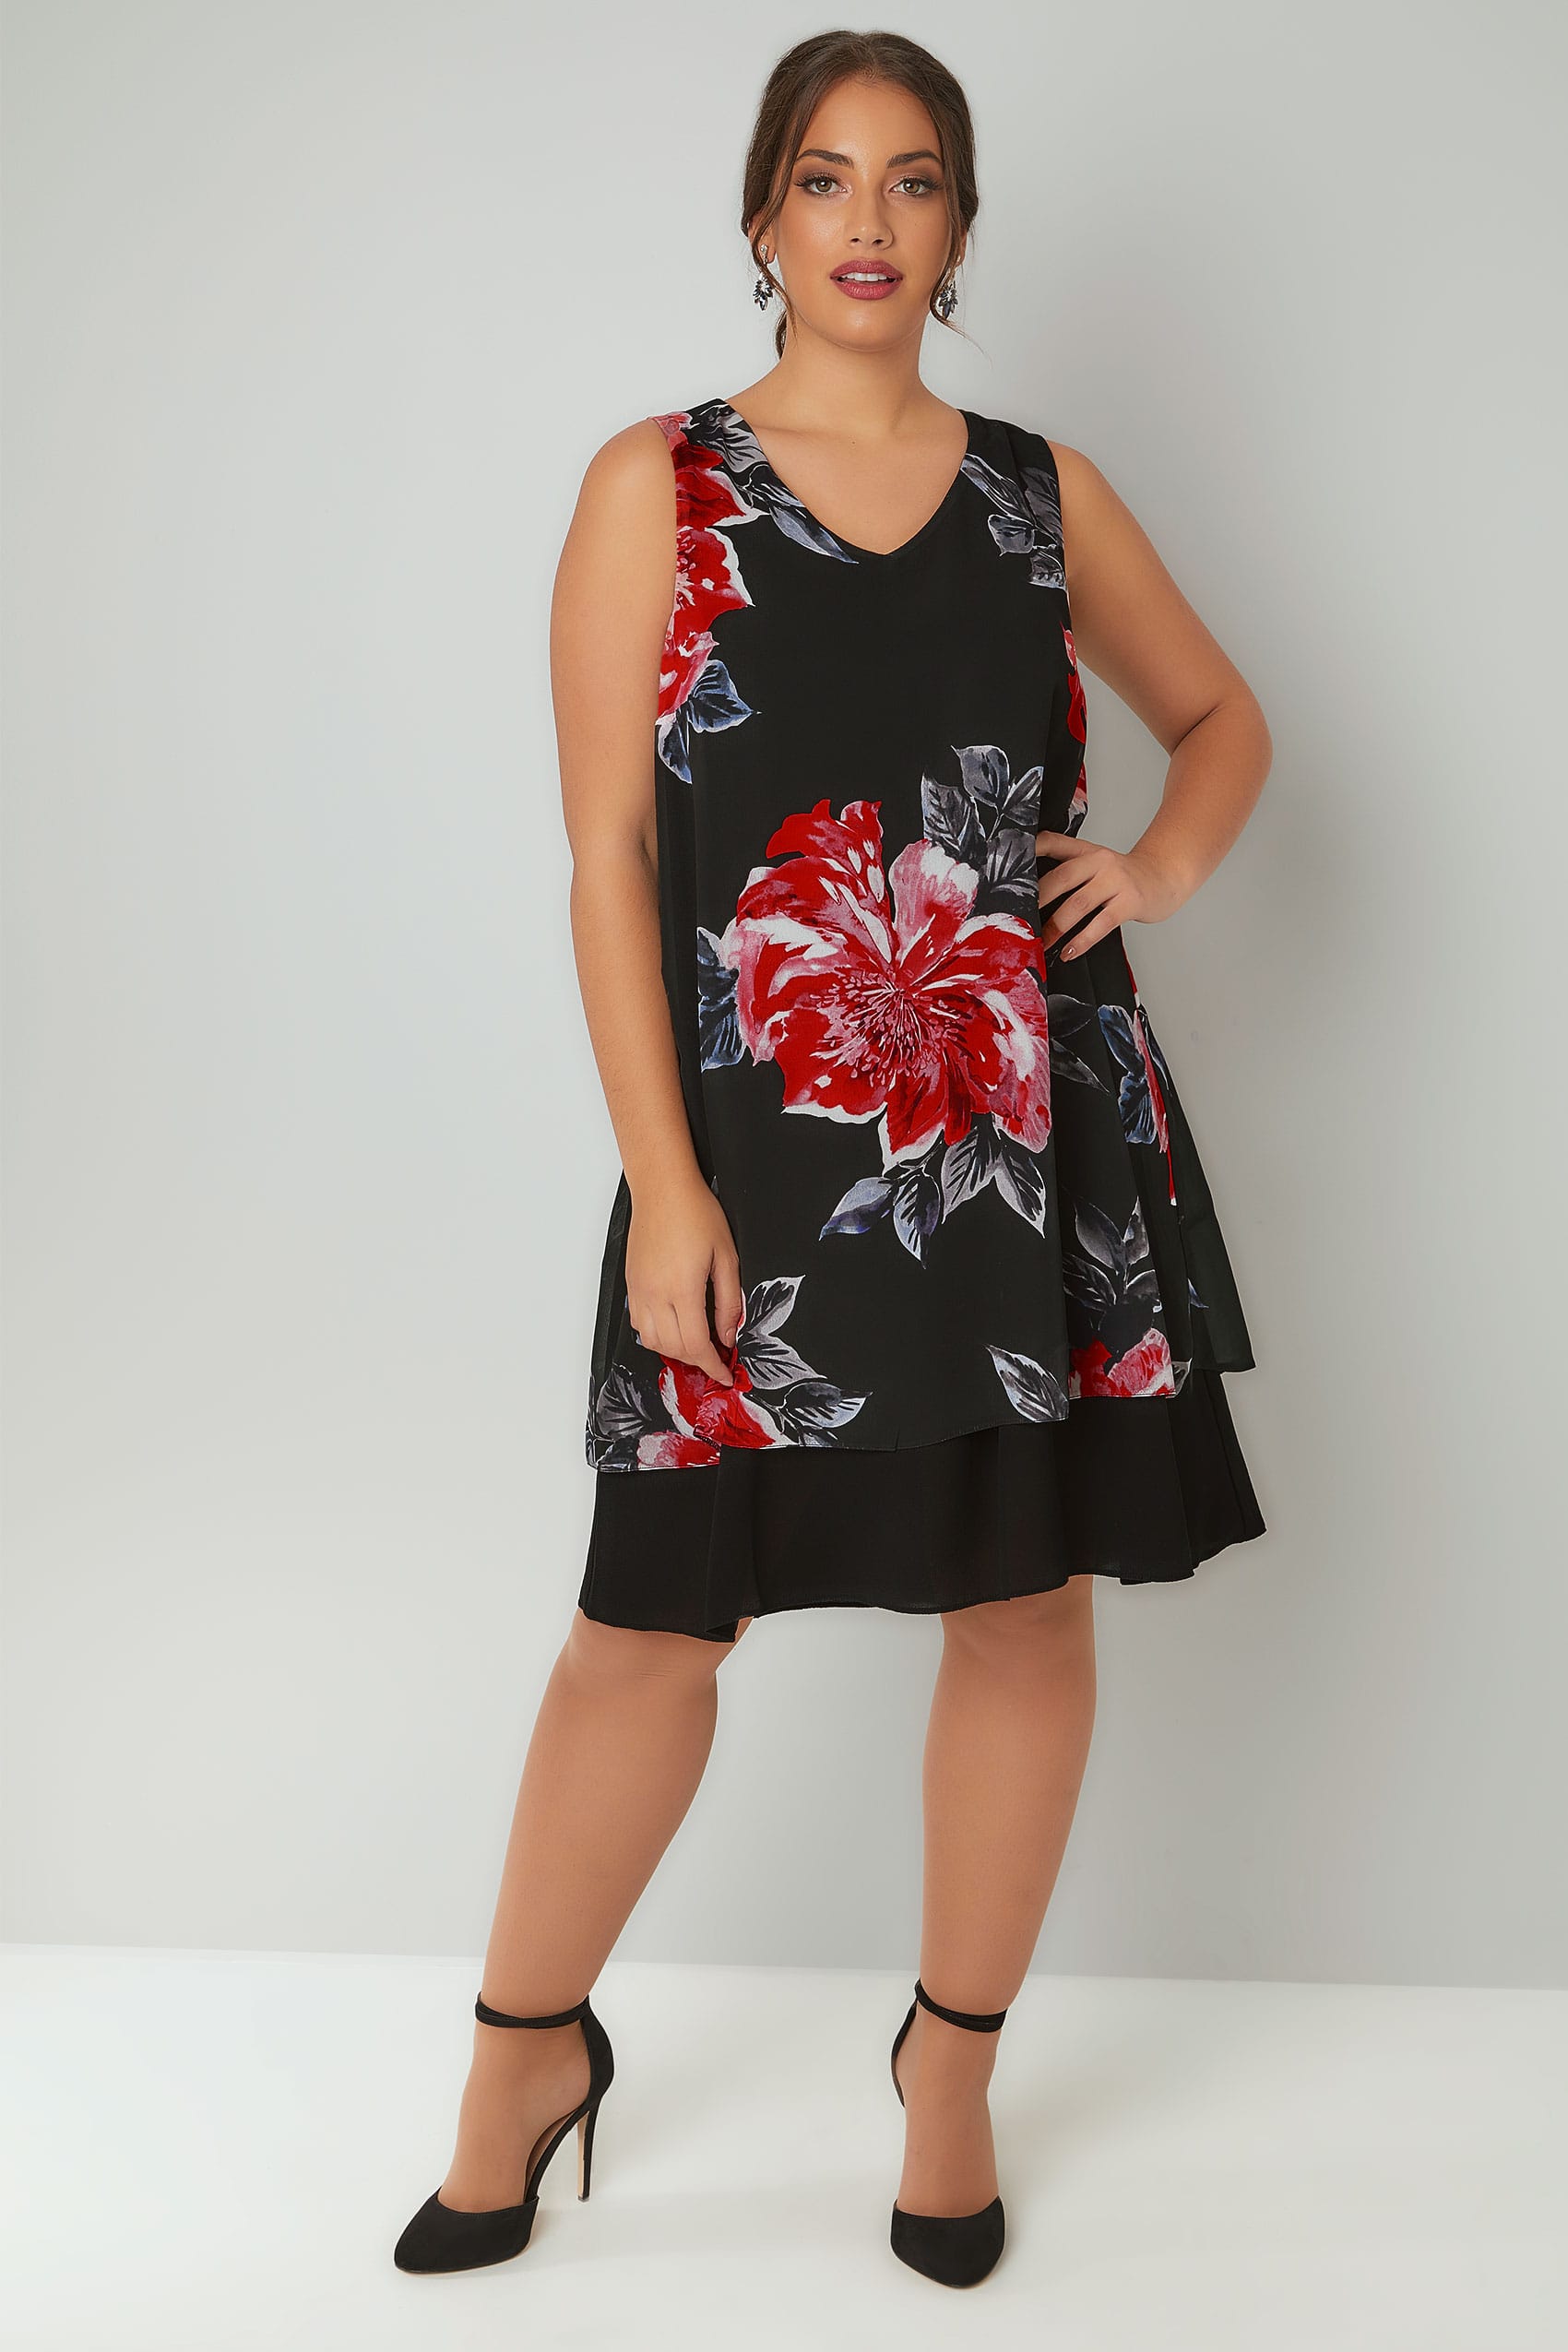 Black And Multi Floral Print Sleeveless Chiffon Layered Dress Plus Size 16 To 36